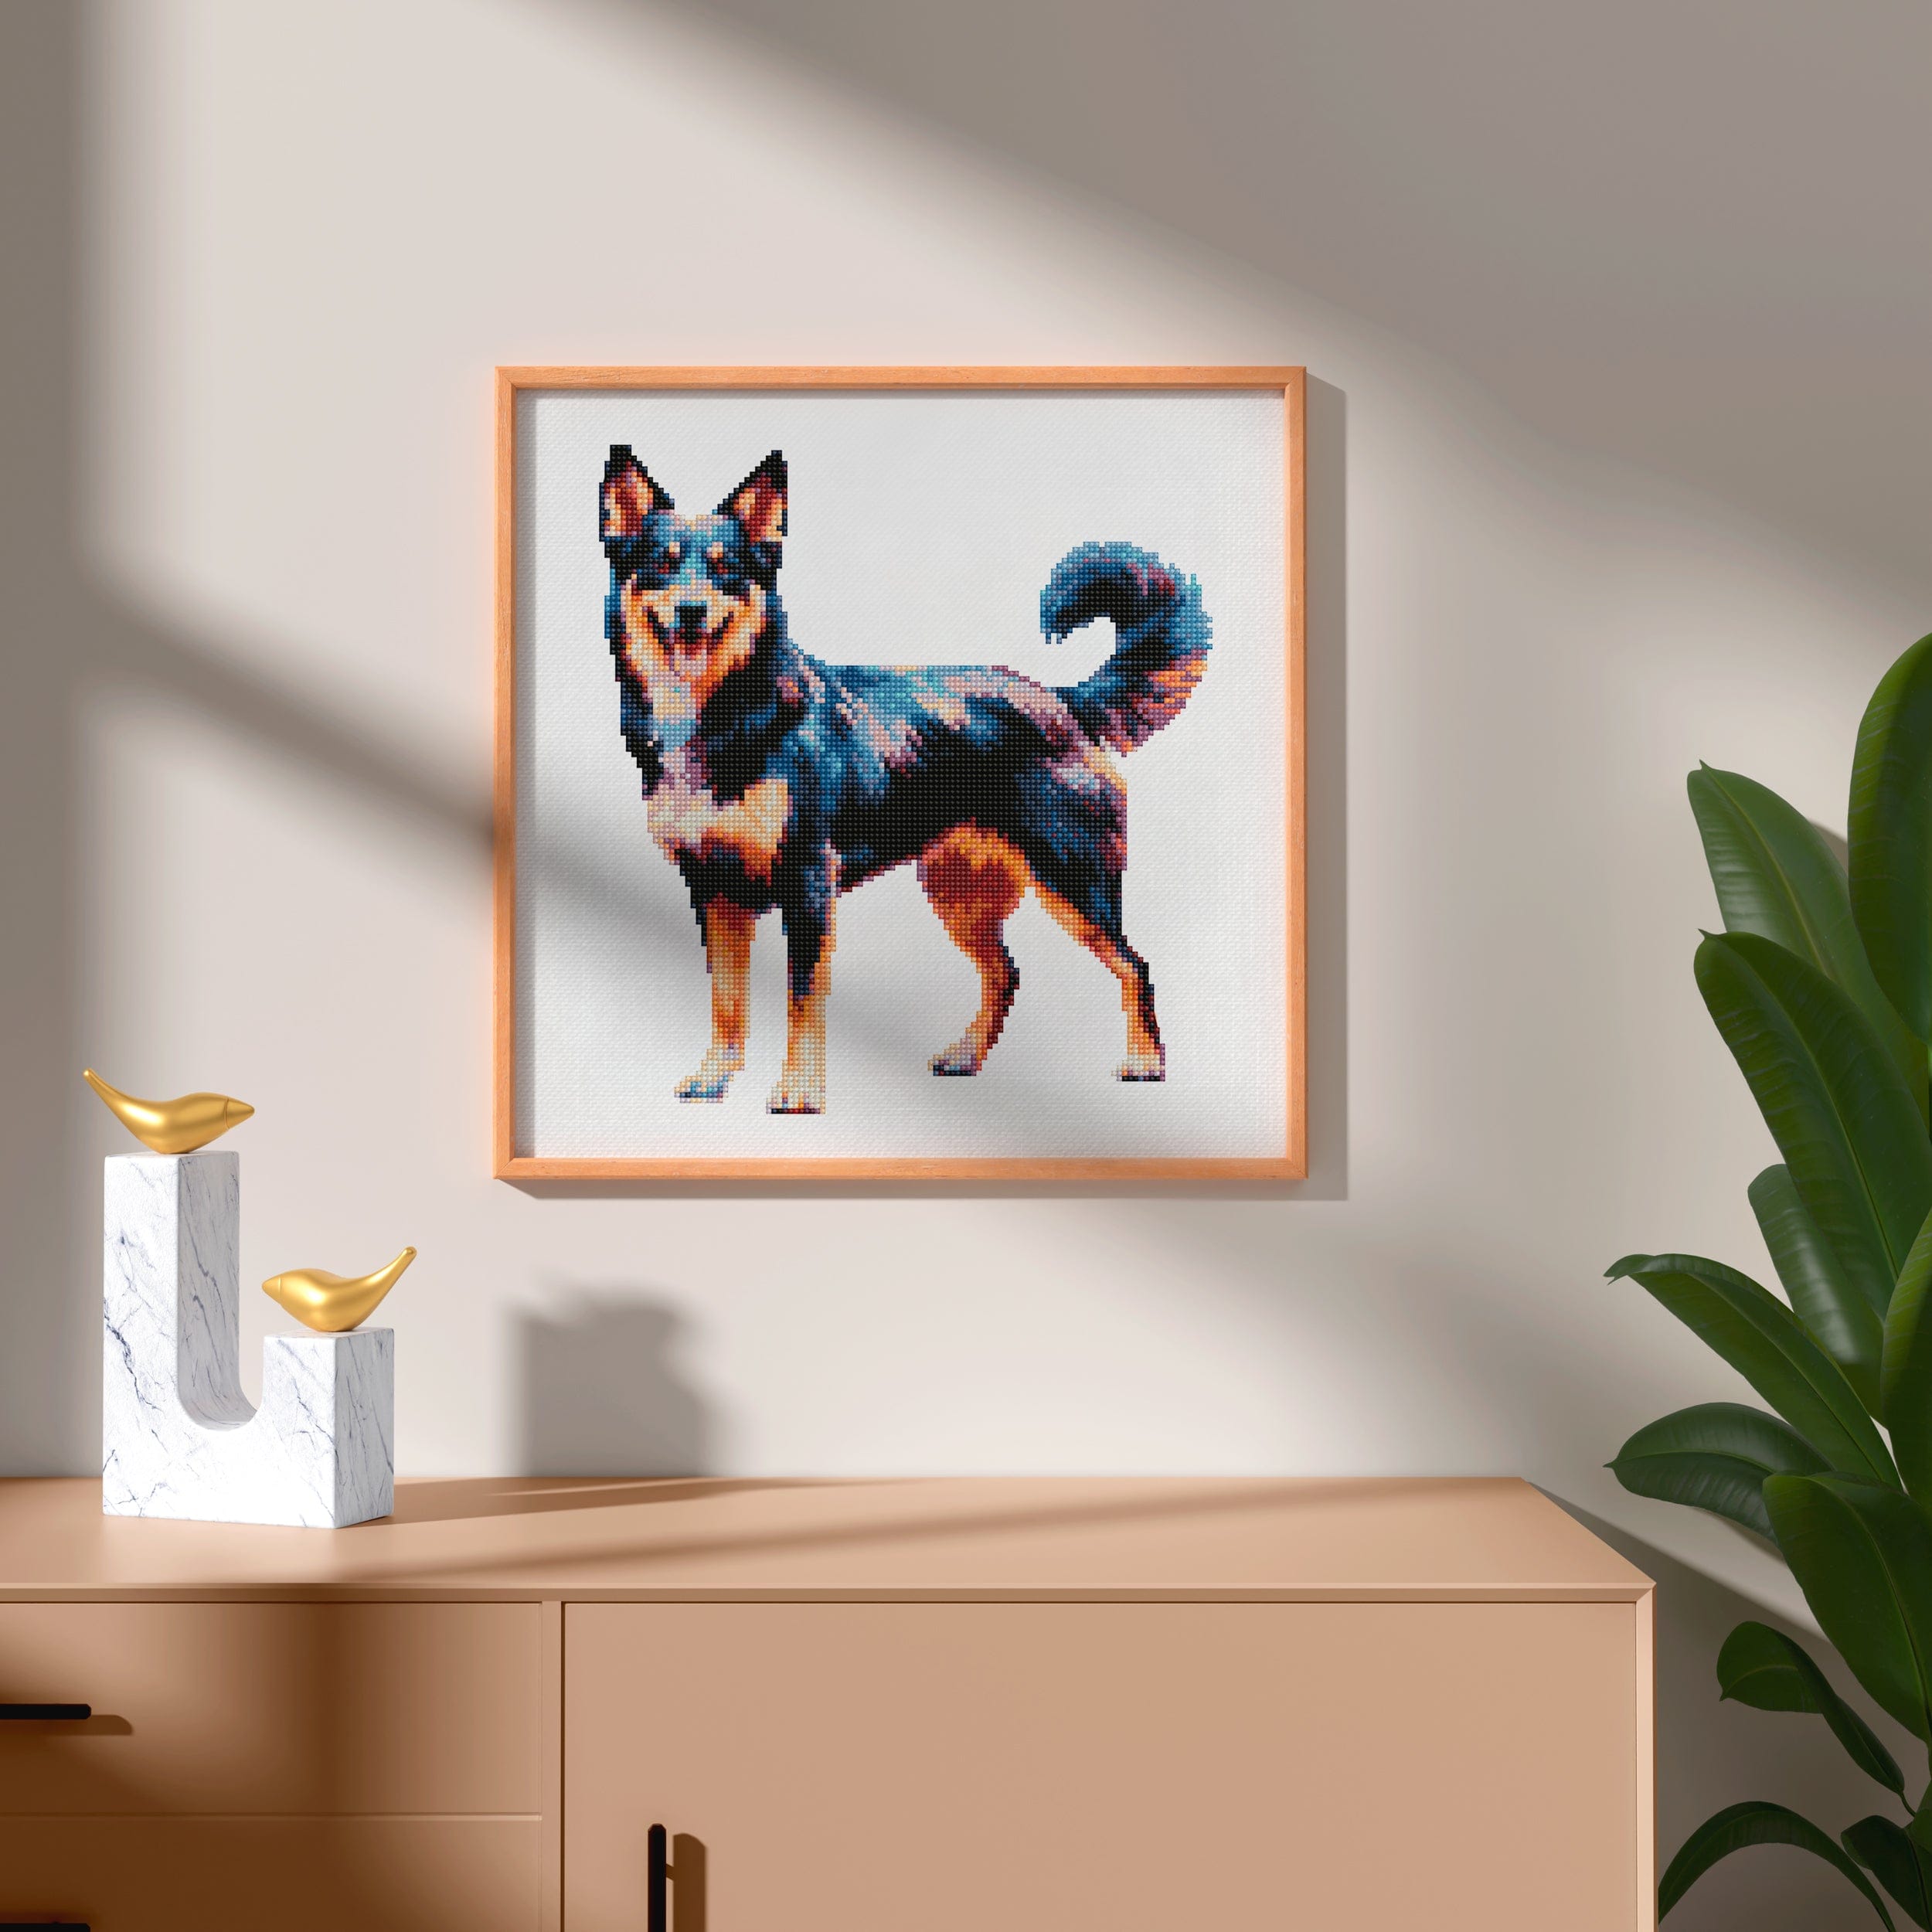 15.7"x15.7" / 40cm x 40cm Australian Kelpie Dog - Diamond Painting Kit